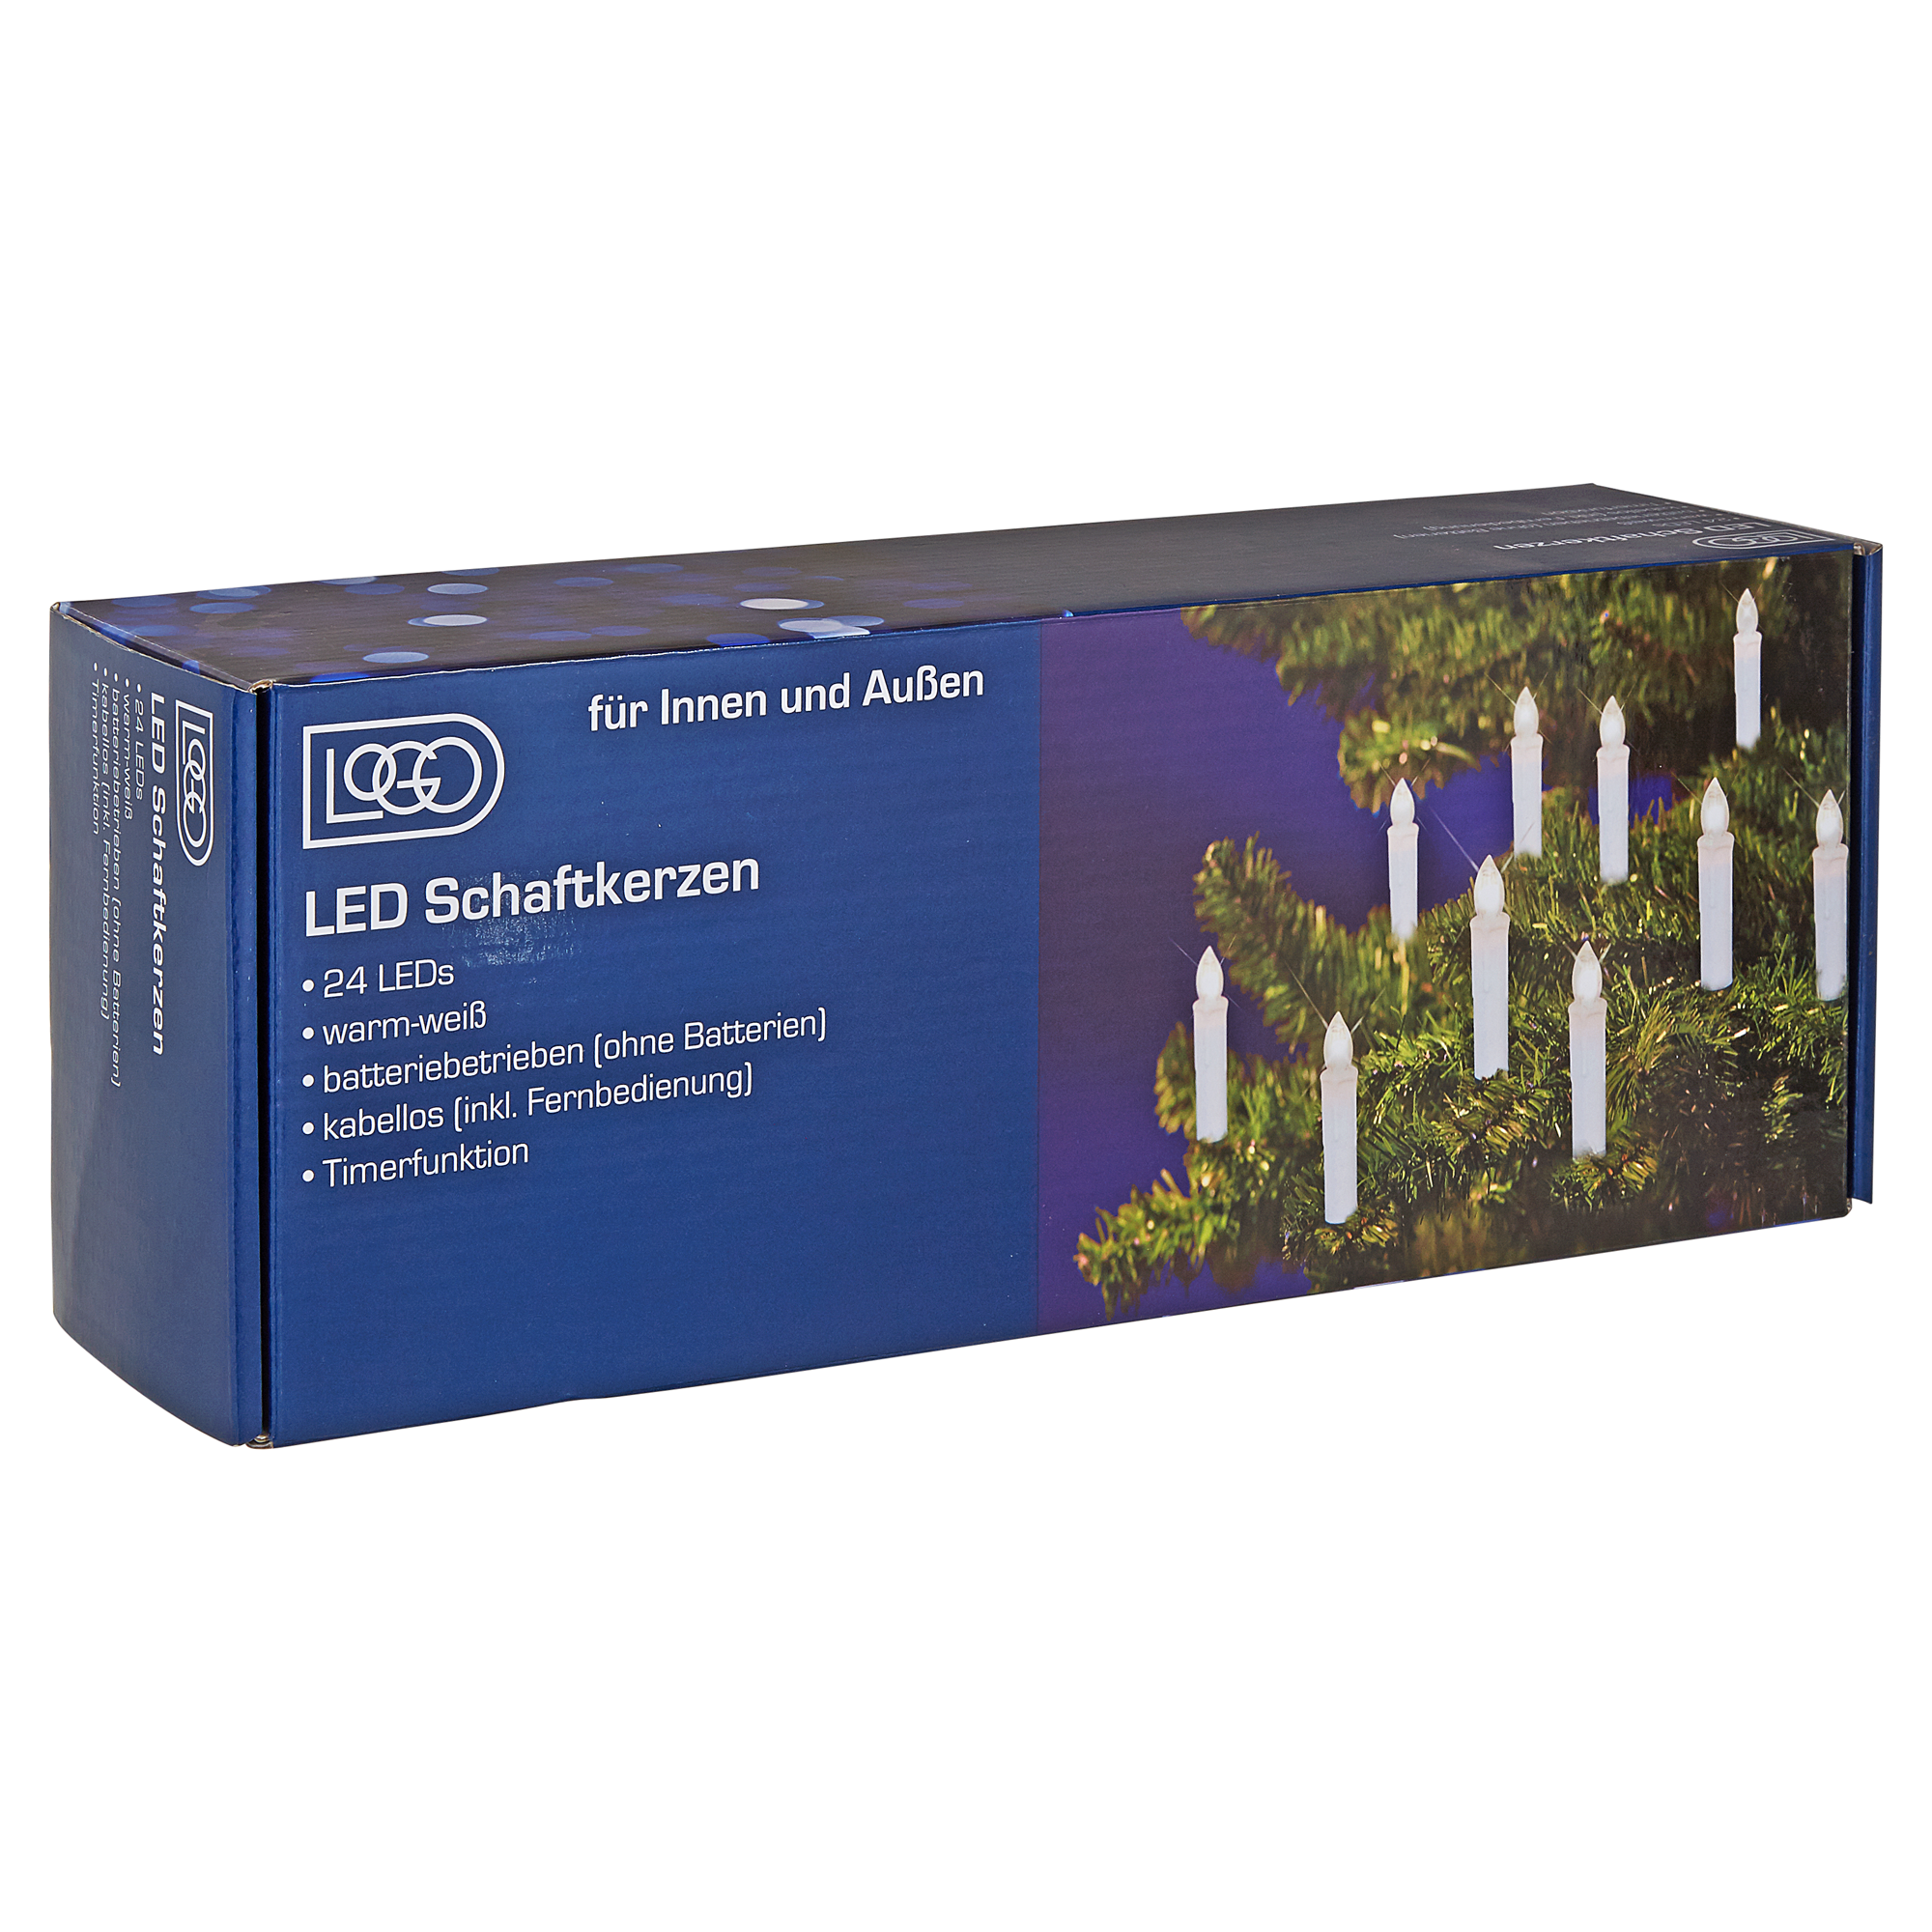 Weihnachtsbeleuchtung LED-Schaftkerzen inkl. Fernbedienung + product picture